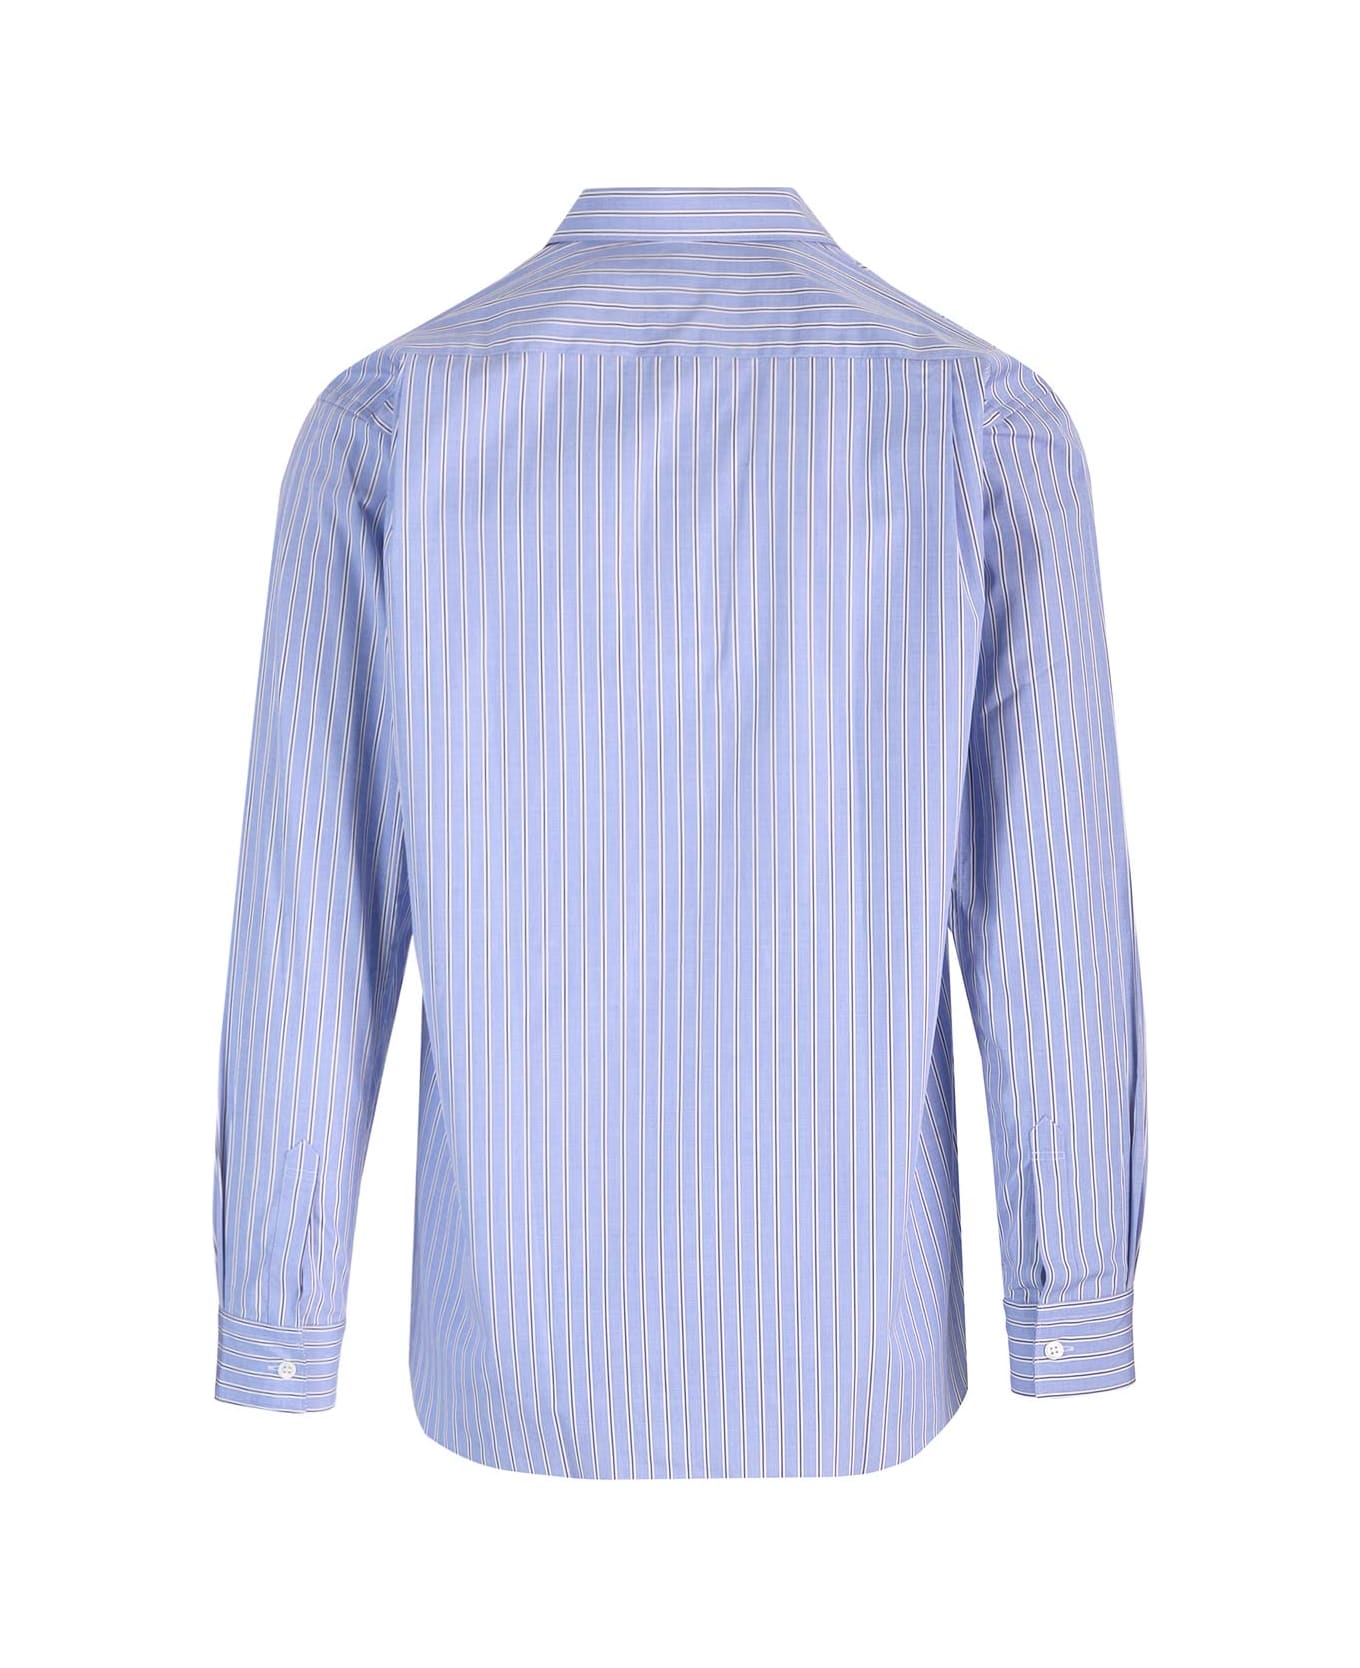 Comme des Garçons Shirt Striped Shirt With Pocket - MULTICOLOR